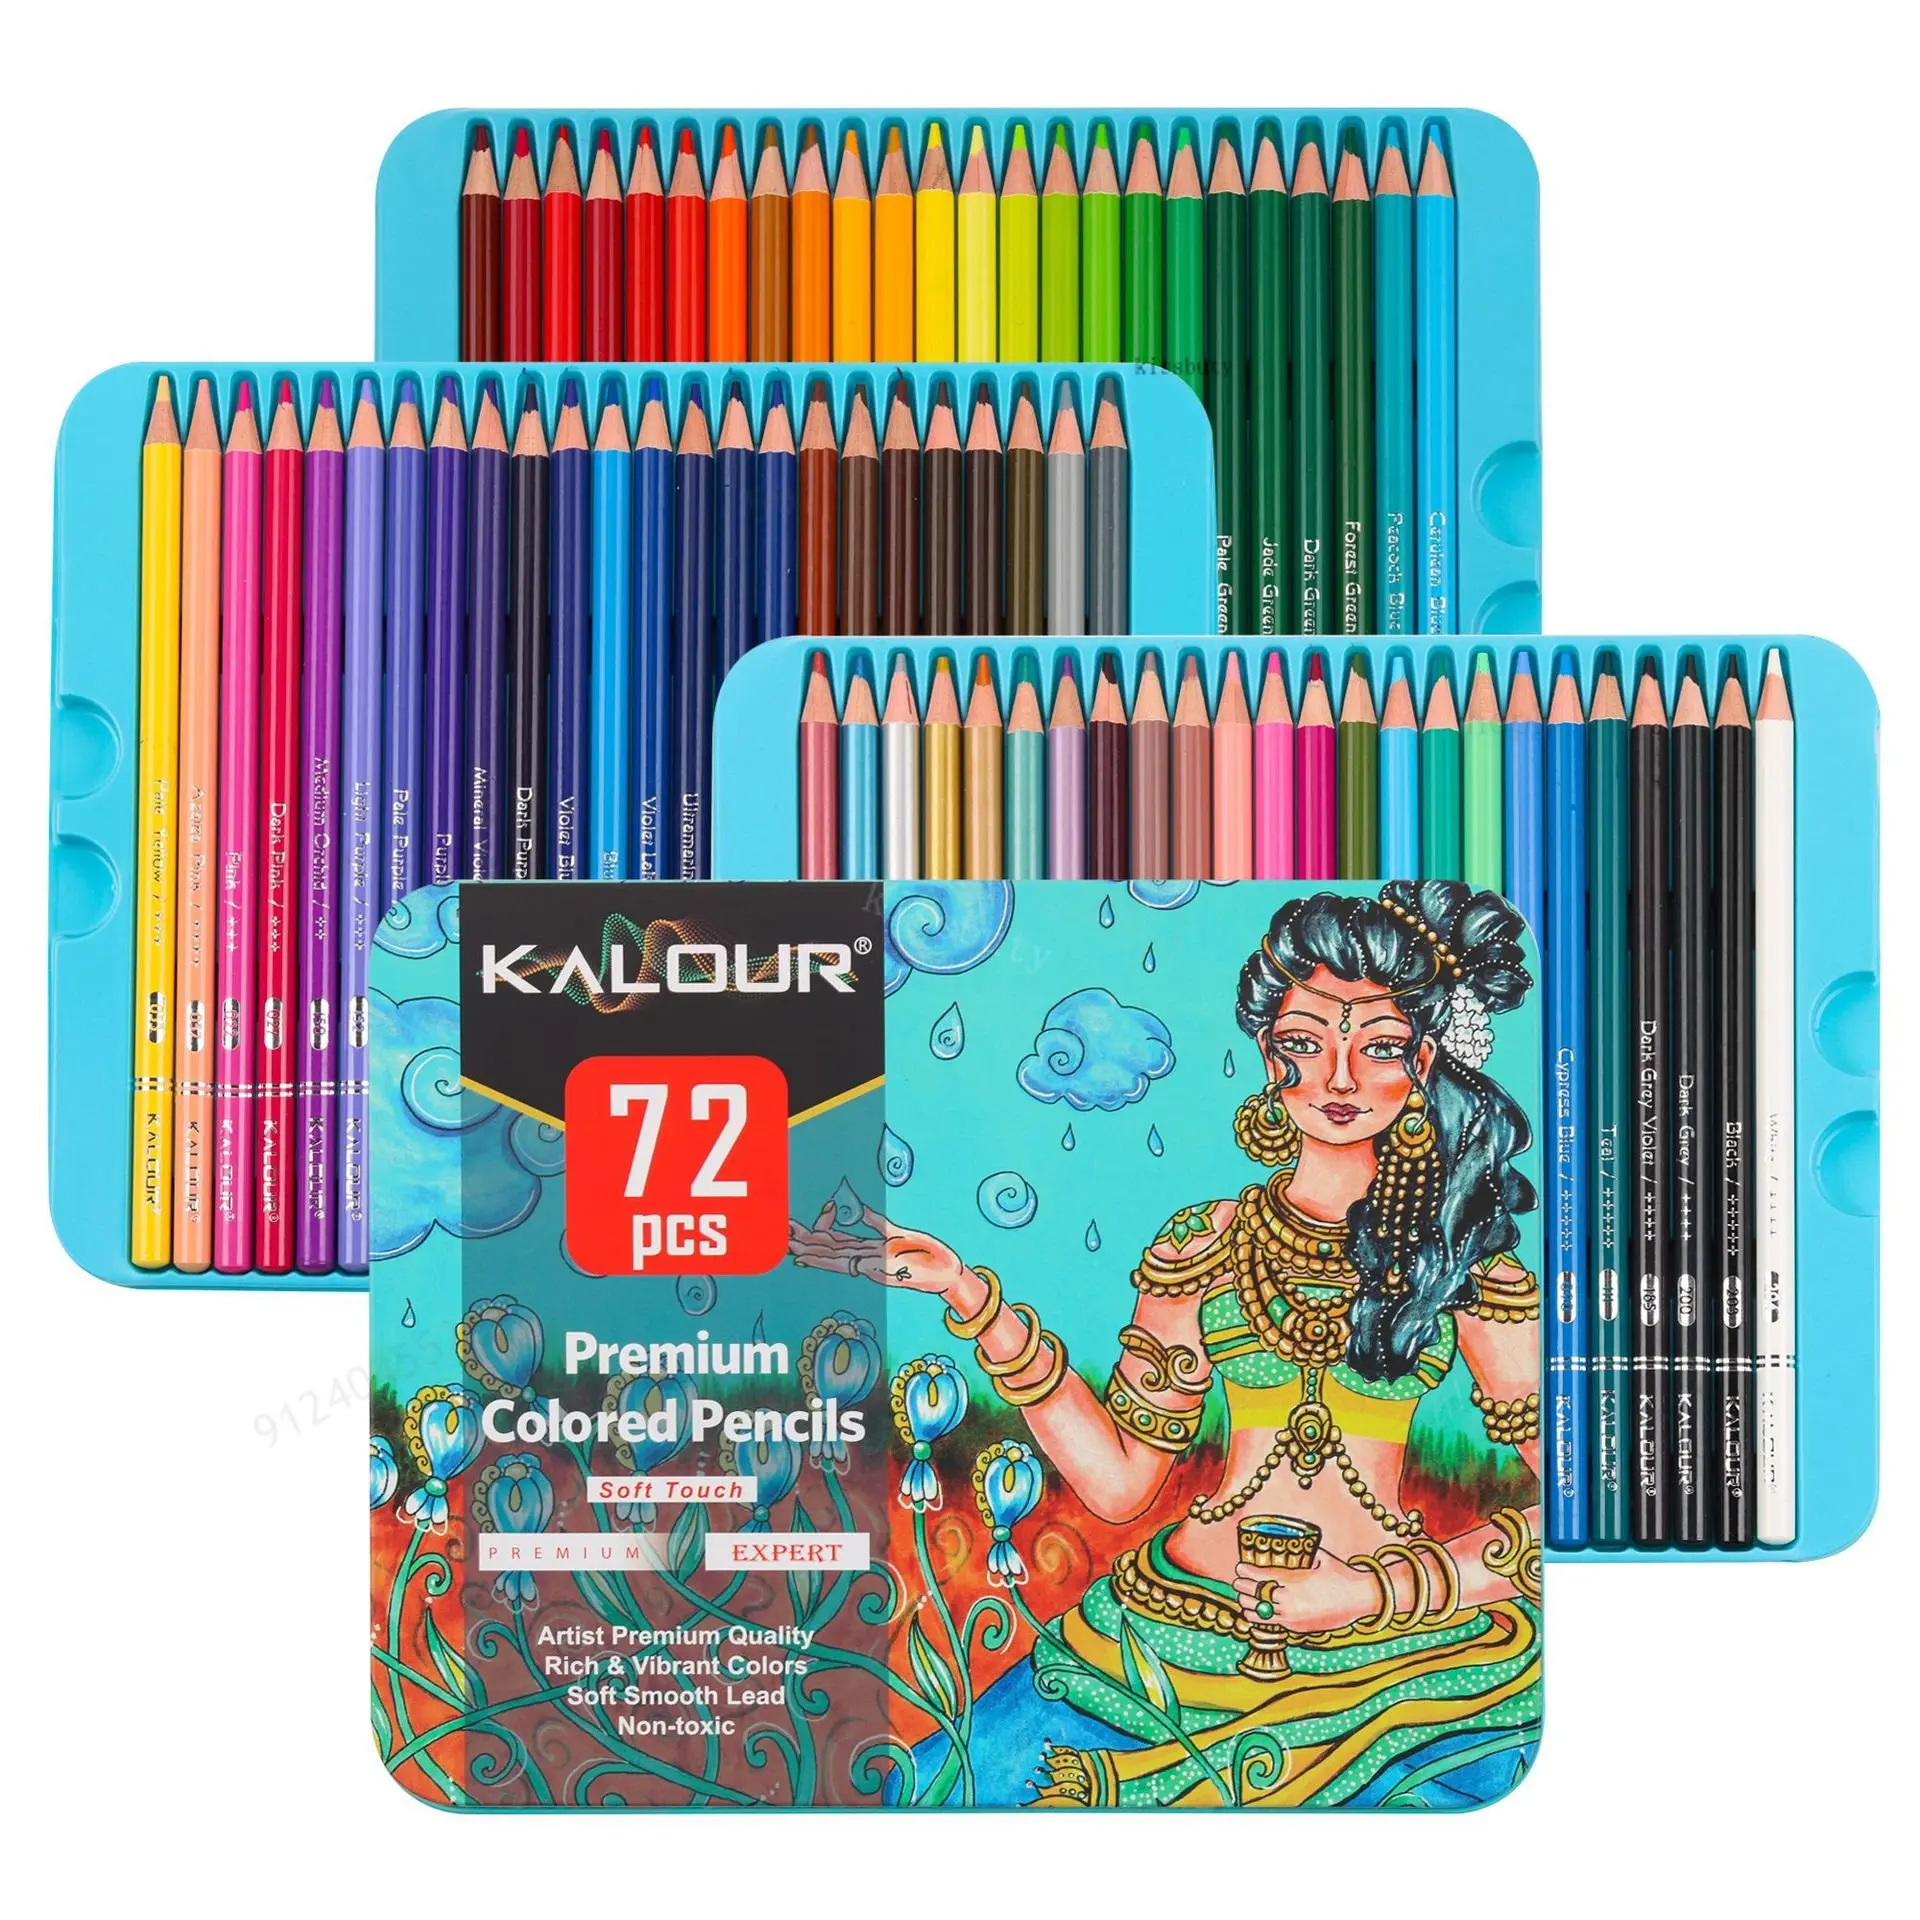 

KALOUR Professional 72 Colors Oil Pencil Lead Art Coloring Book Painting Colored Pencils Oil Drawing Sketch Art Supplies